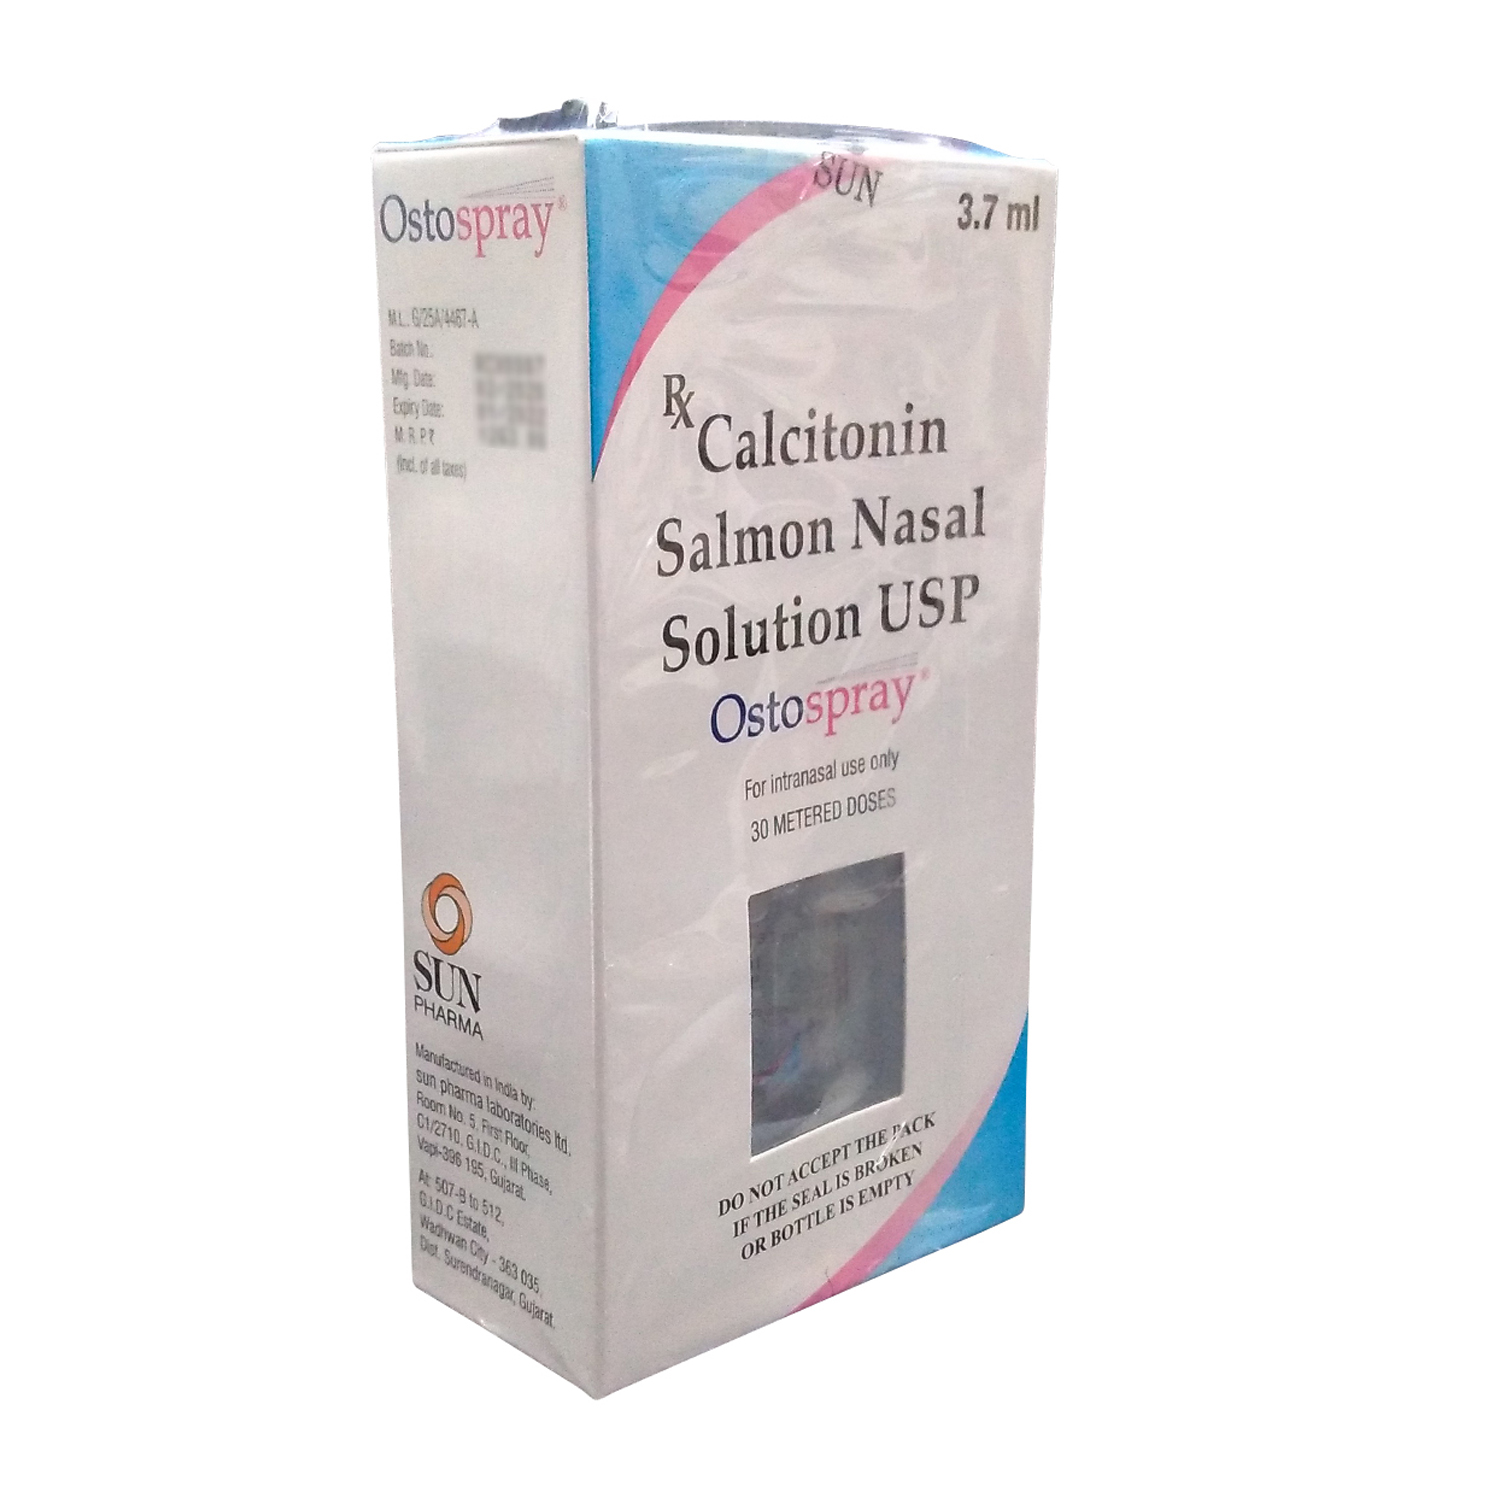 Ostospray 30 MDI Nasal Spray - EACH of 1 | Udaan - B2B Buying for Retailers